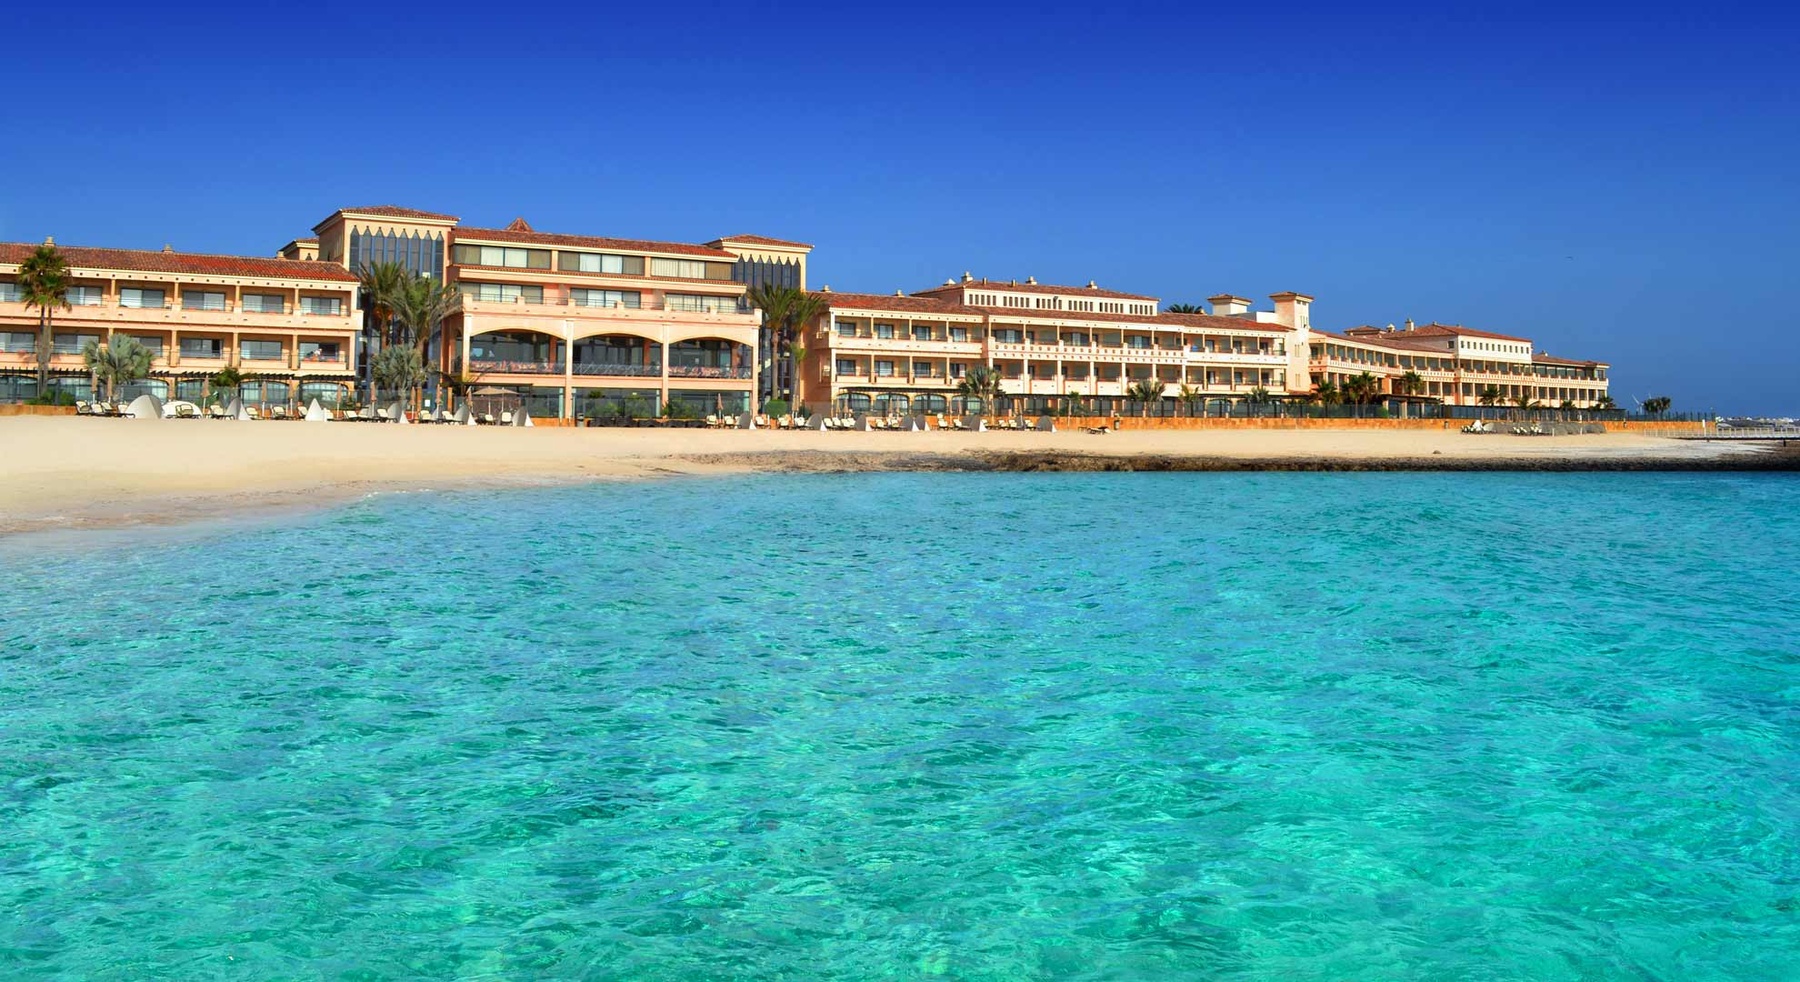 Gran Hotel Atlantis Bahía Real | HIP Hotel Investment Partners